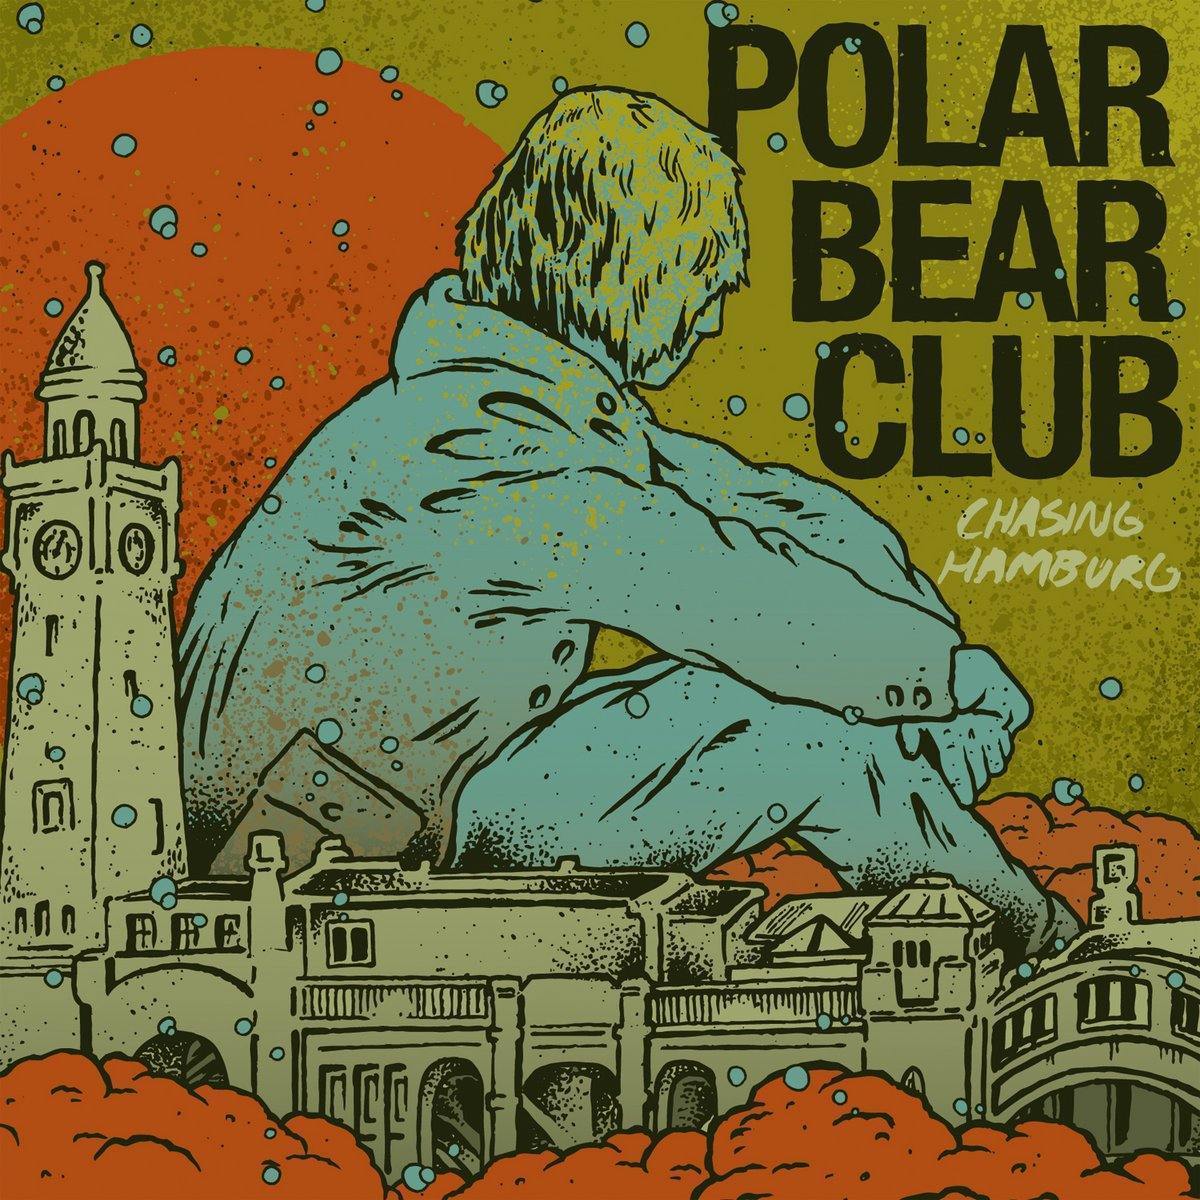 Buy – Polar Bear Club "Chasing Hamburg" 12" – Band & Music Merch – Cold Cuts Merch